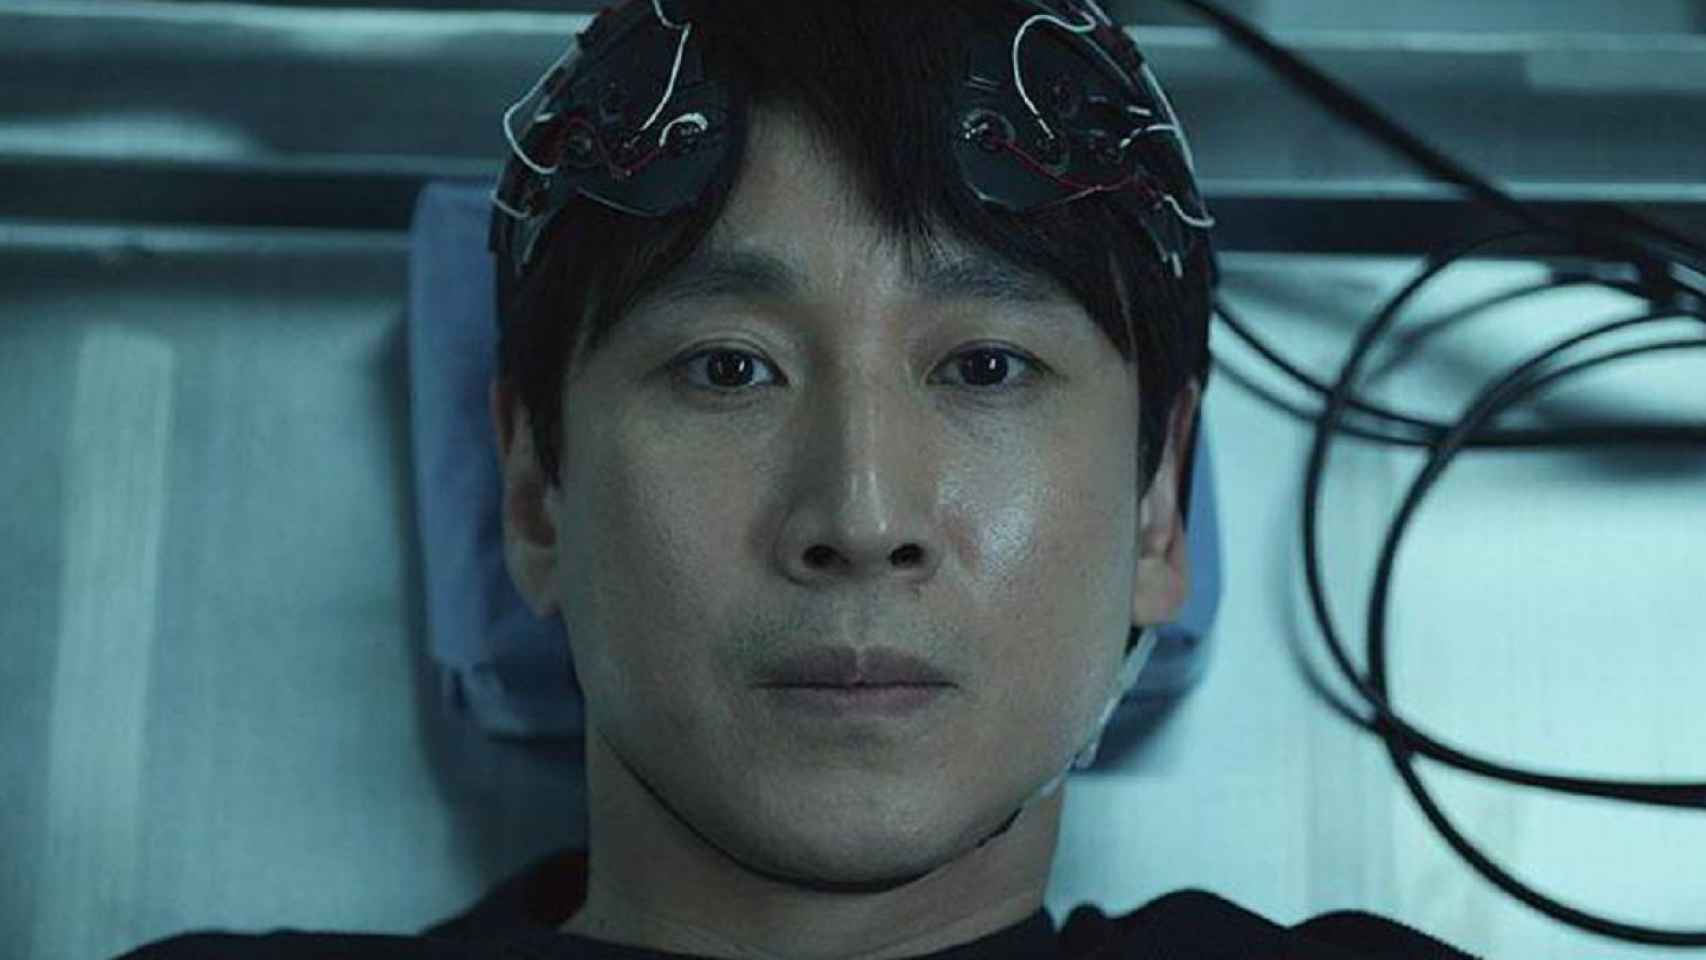 LEE Sun-Kyun ('Parásitos') protagoniza 'Dr. Brain'.